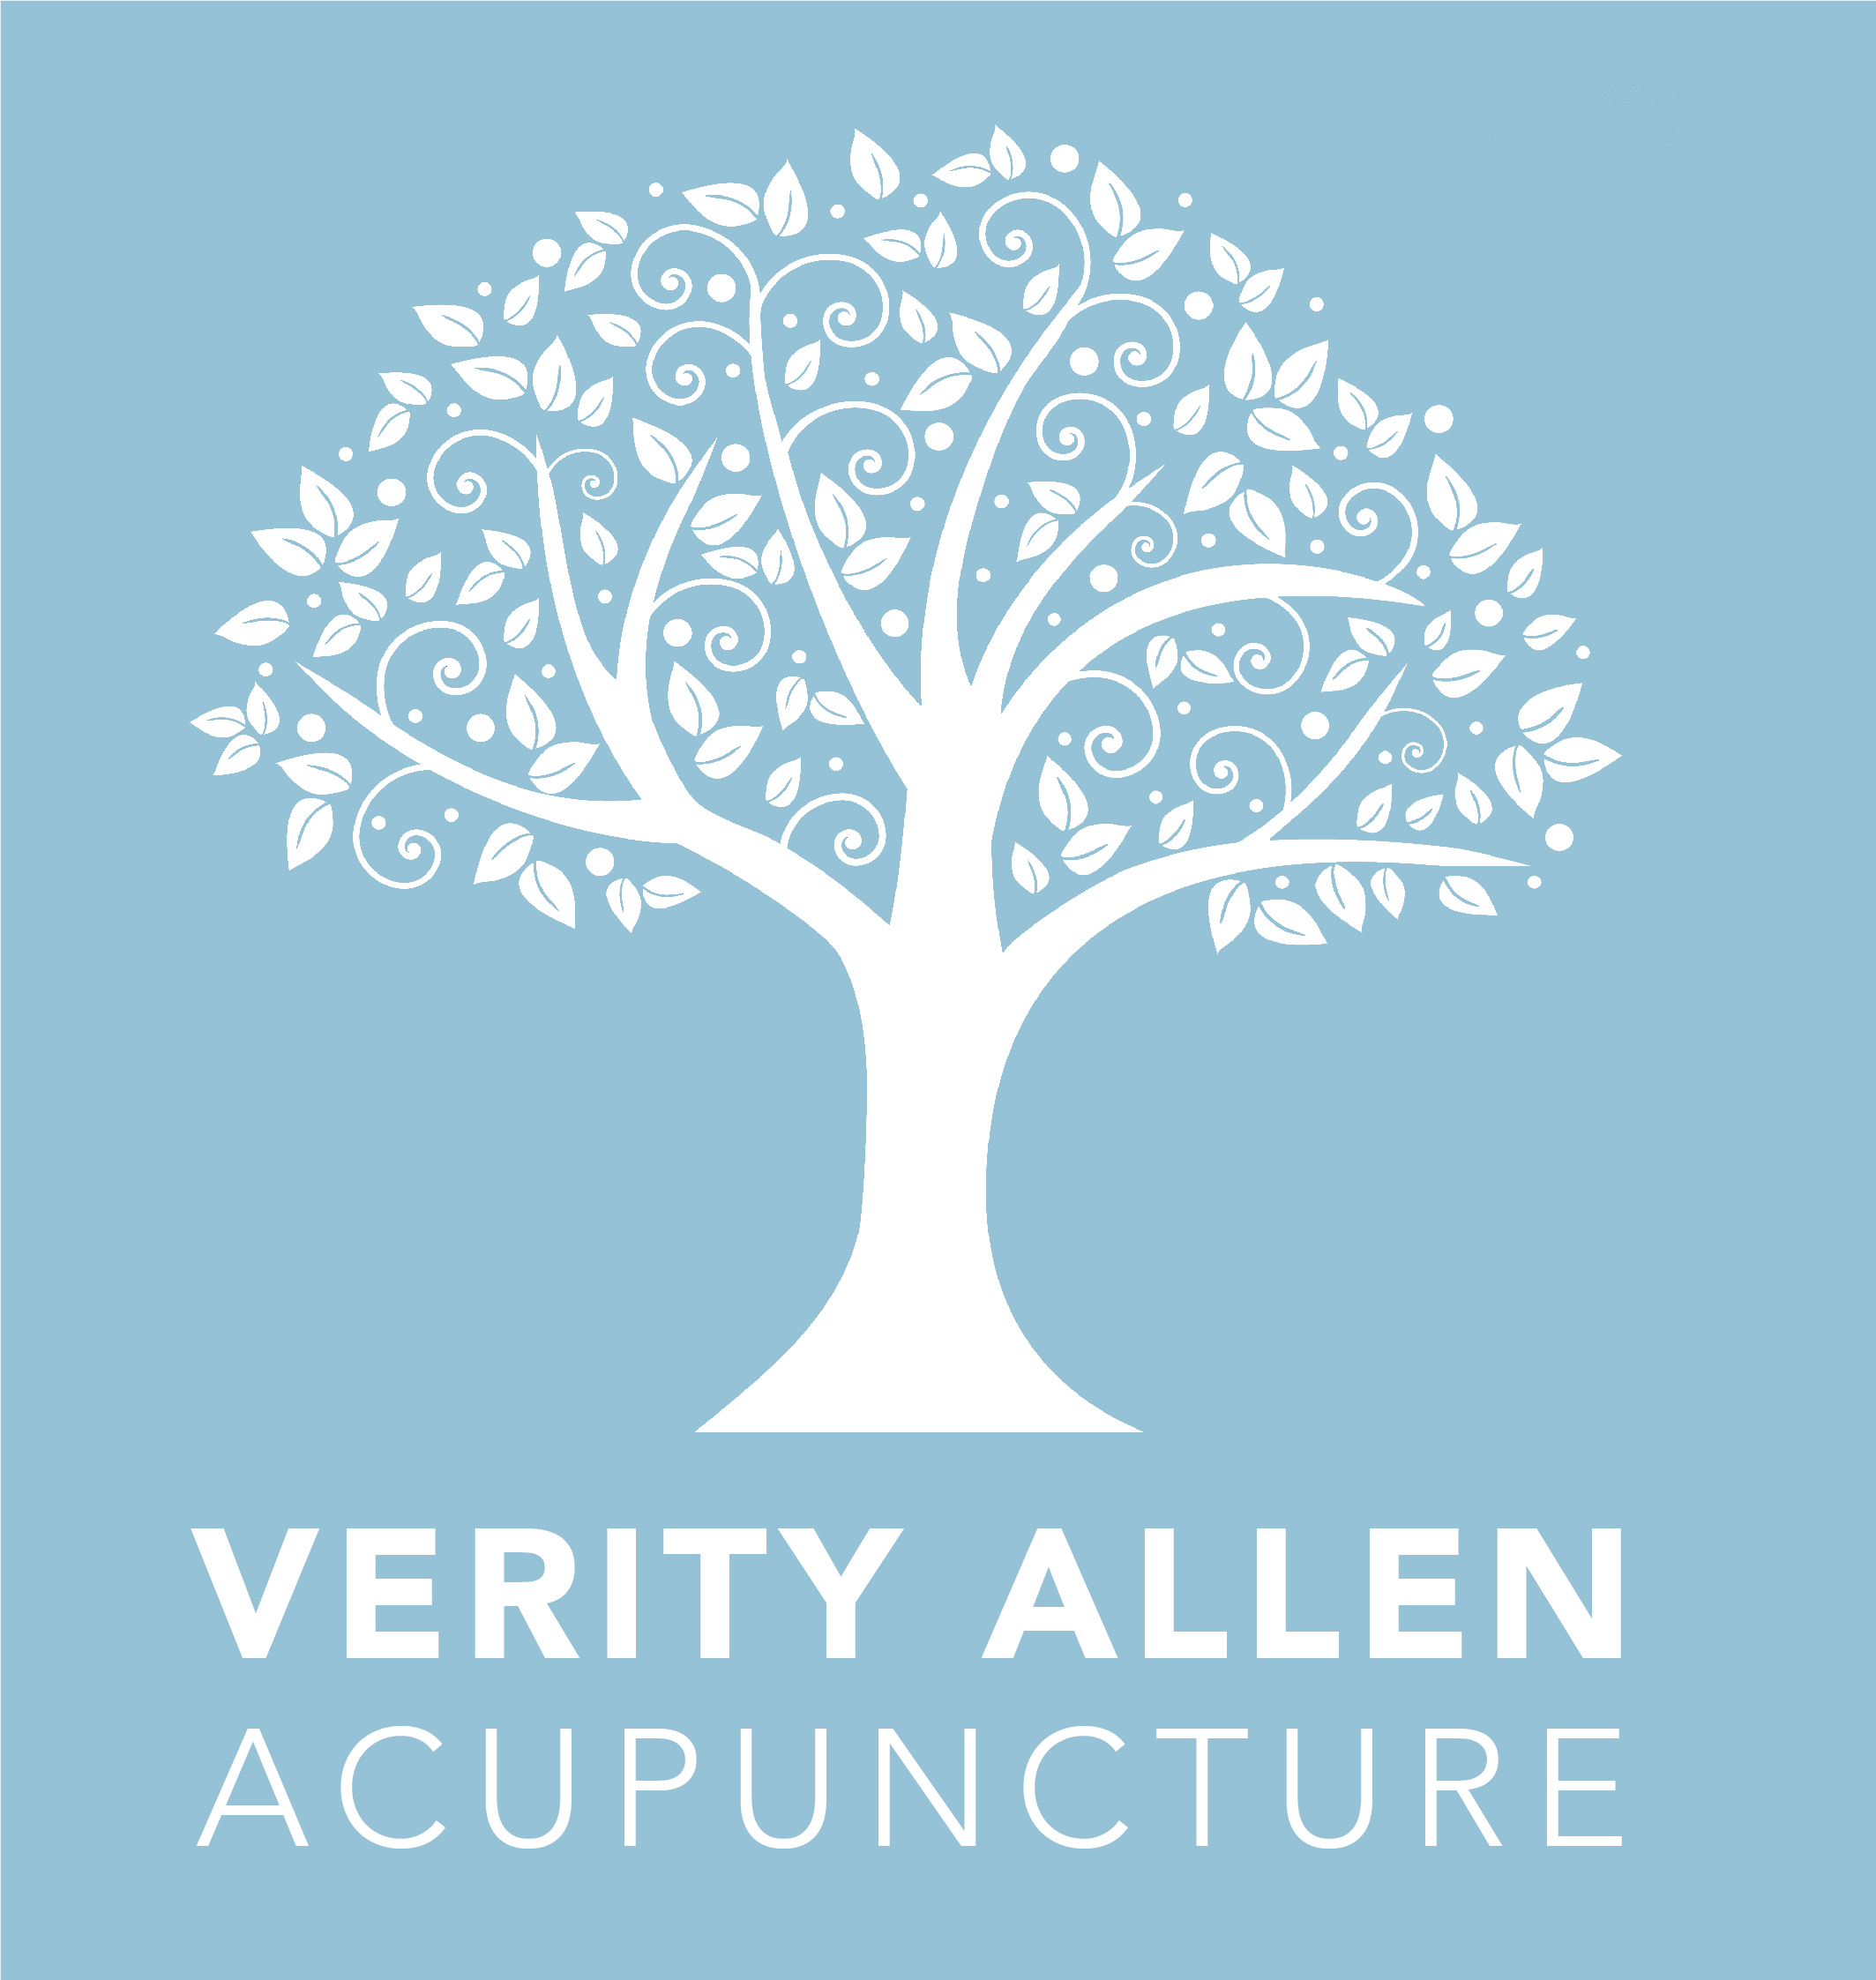 Verity Allen Acupuncture company logo